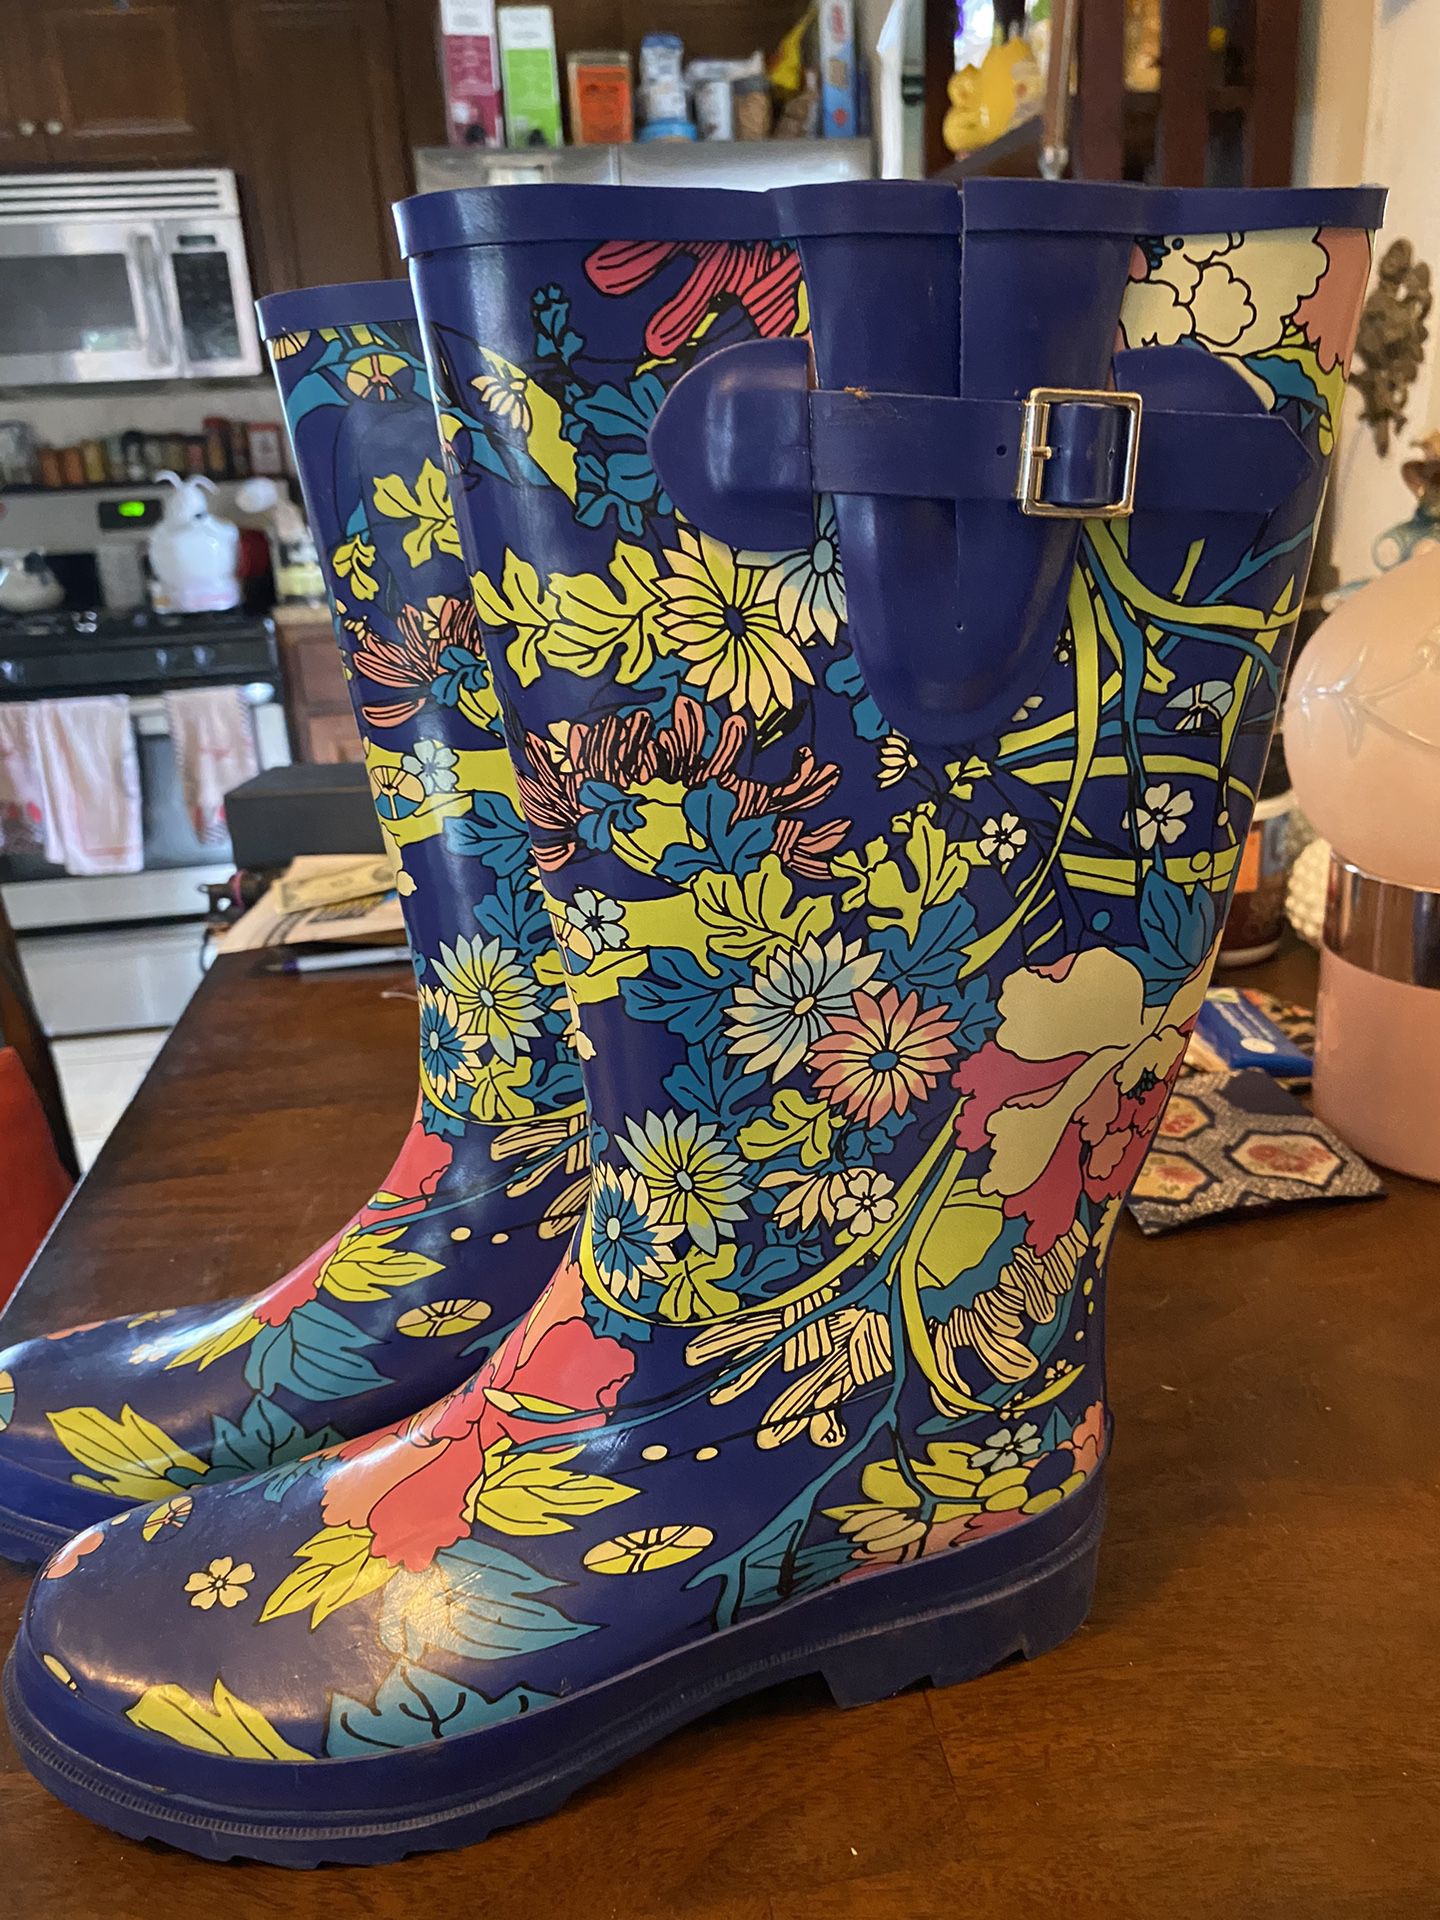 SAKROOTS’ Knee High Rain boots-Women’s Size 10